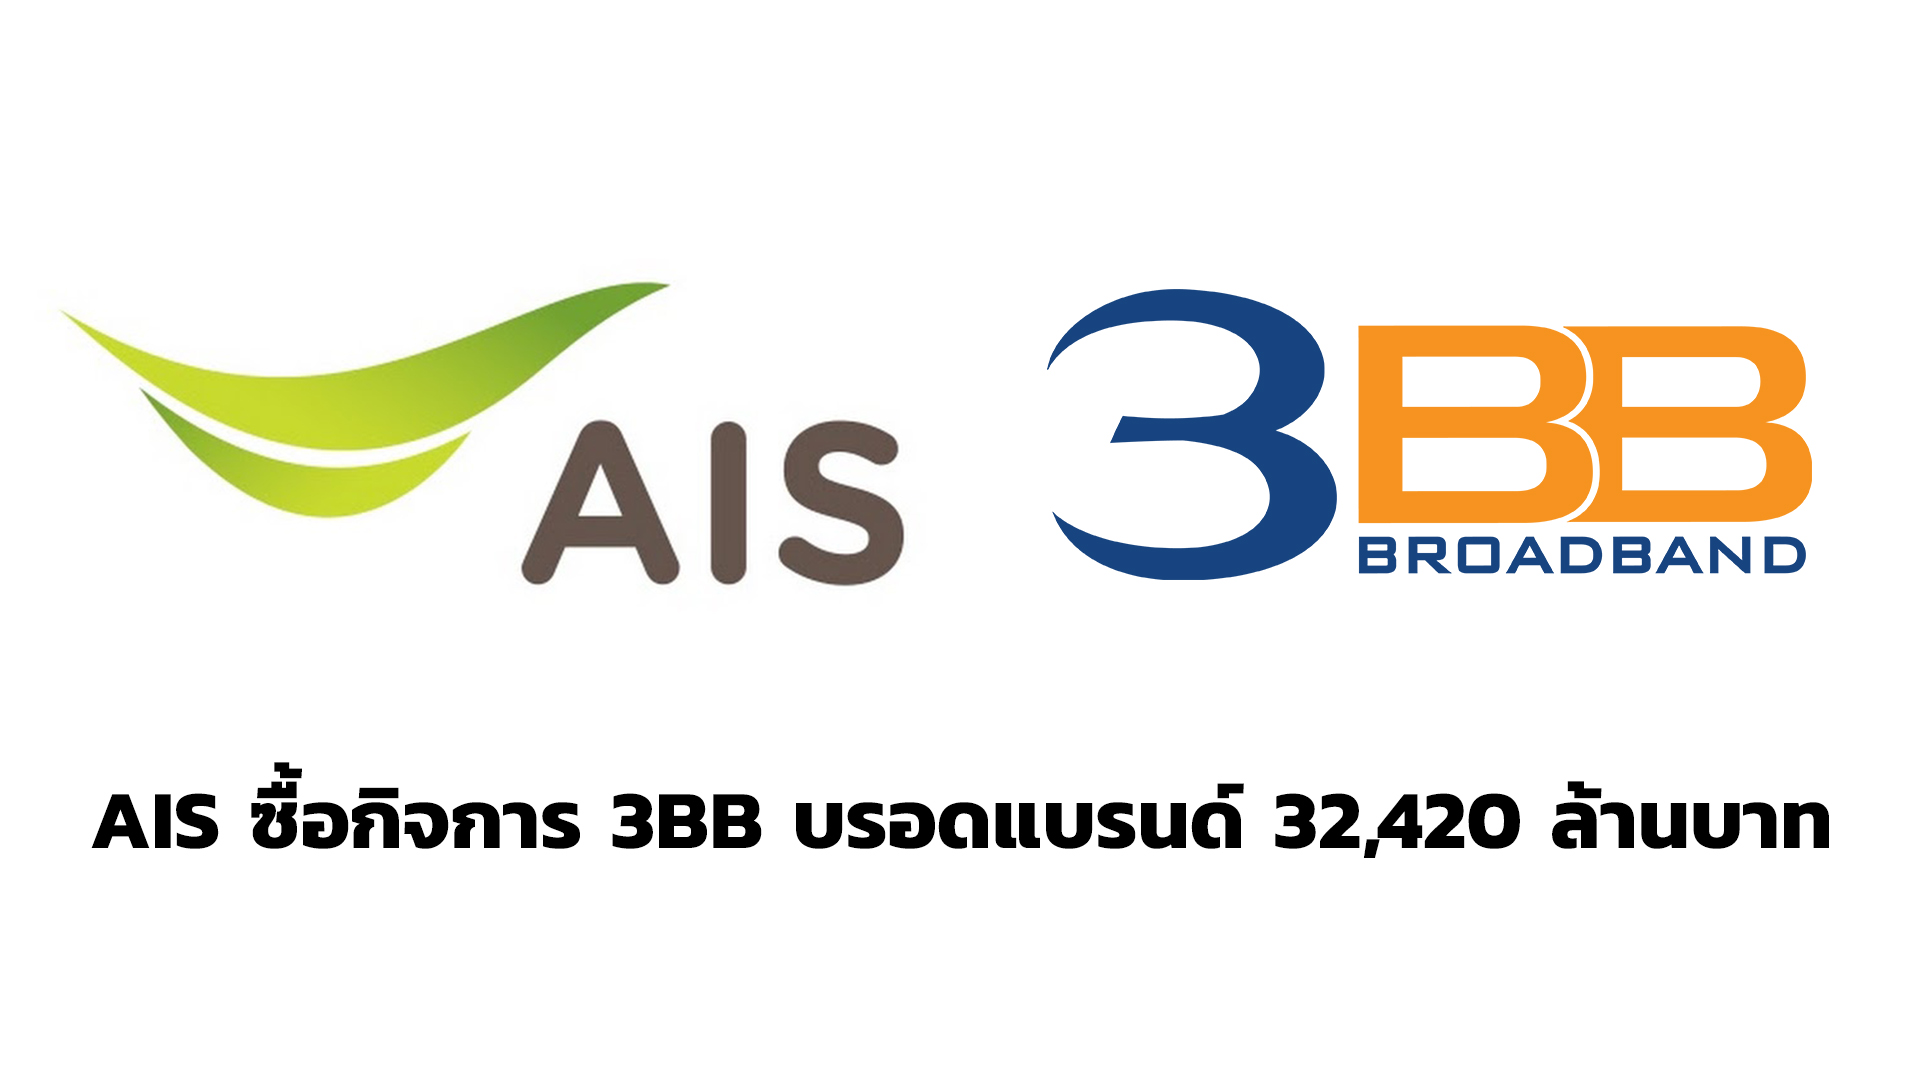 AIS เข้าซื้อกิจการ 3BB ผนวกกำลังขยายการเติบโตในธุรกิจอินเทอร์เน็ต